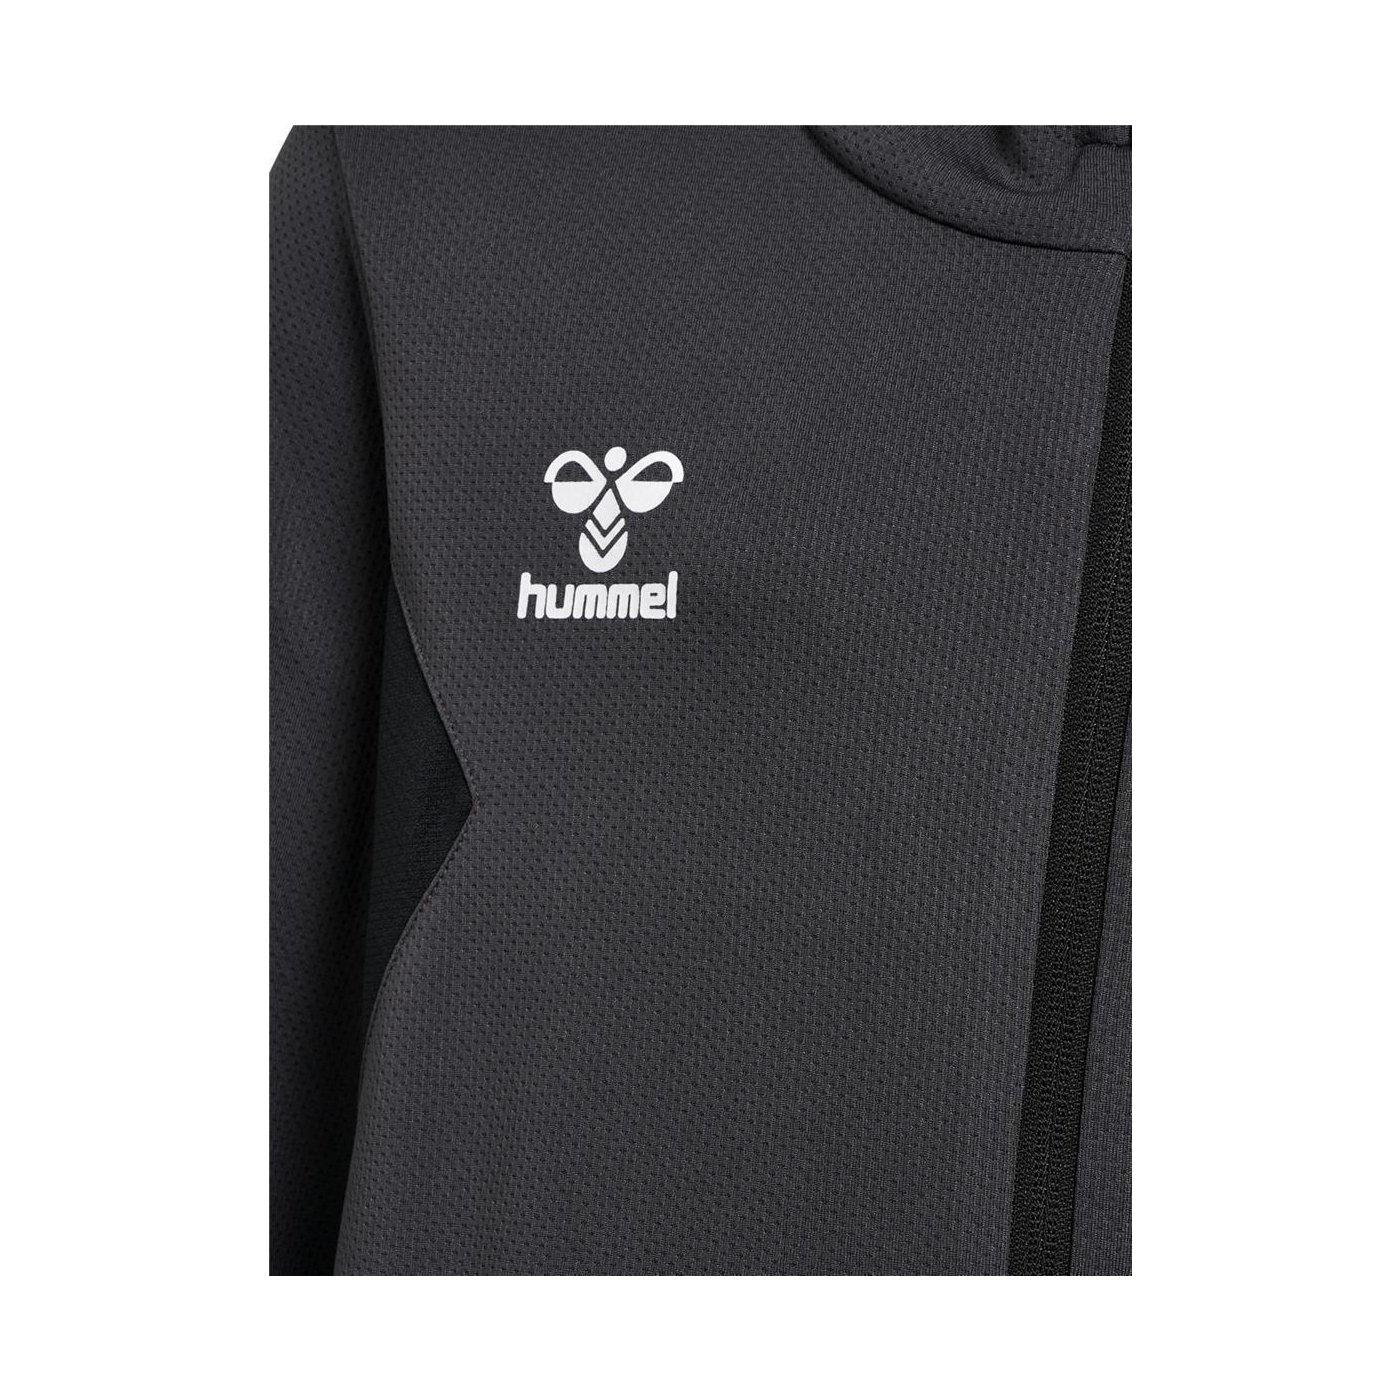 Hummel  Kinder-Trainingsjacke mit Reißverschluss und Kapuze  Authentic 